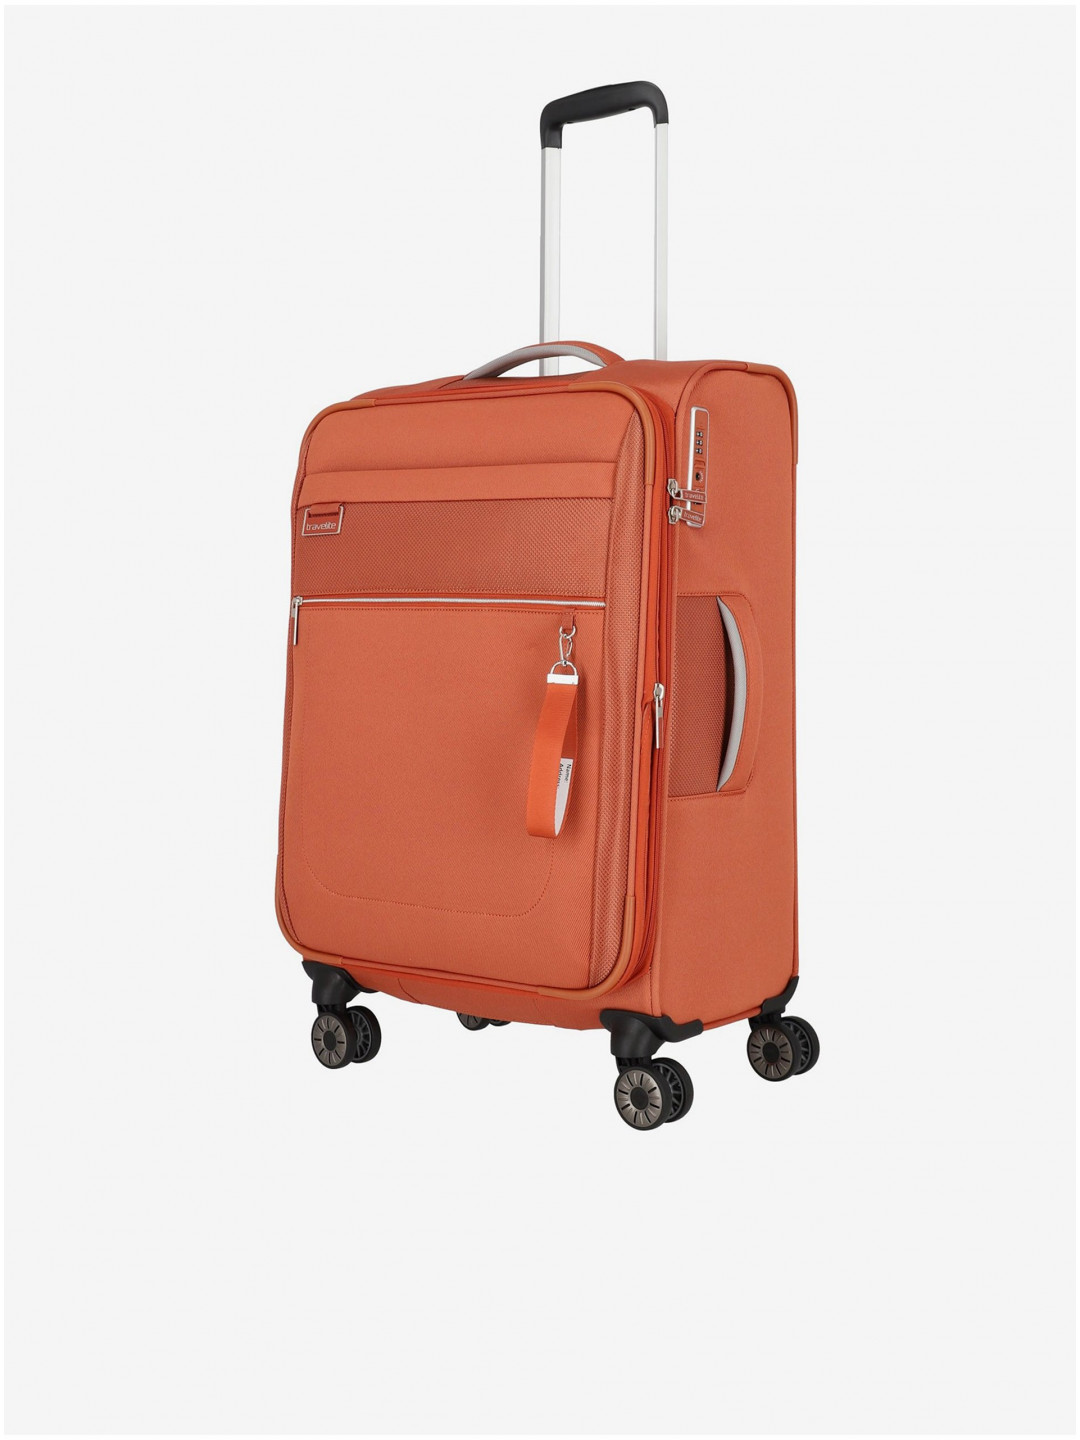 Oranžový cestovní kufr Travelite Miigo 4w M Copper chutney